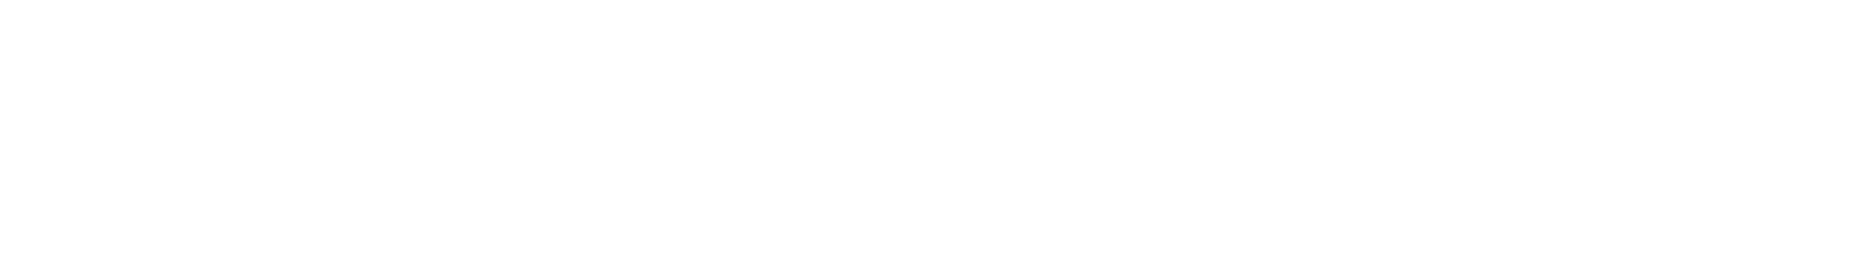 TOKYO CRAFTSMAN東京の職人